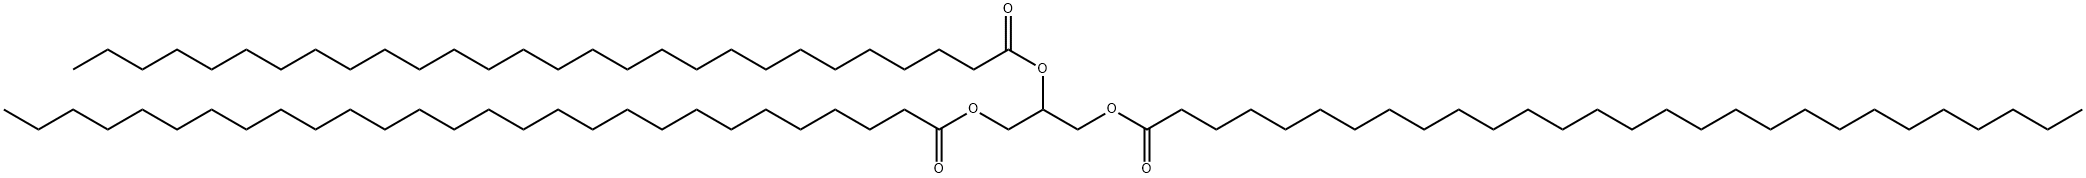 propane-1,2,3-triyl trioctacosanoate|